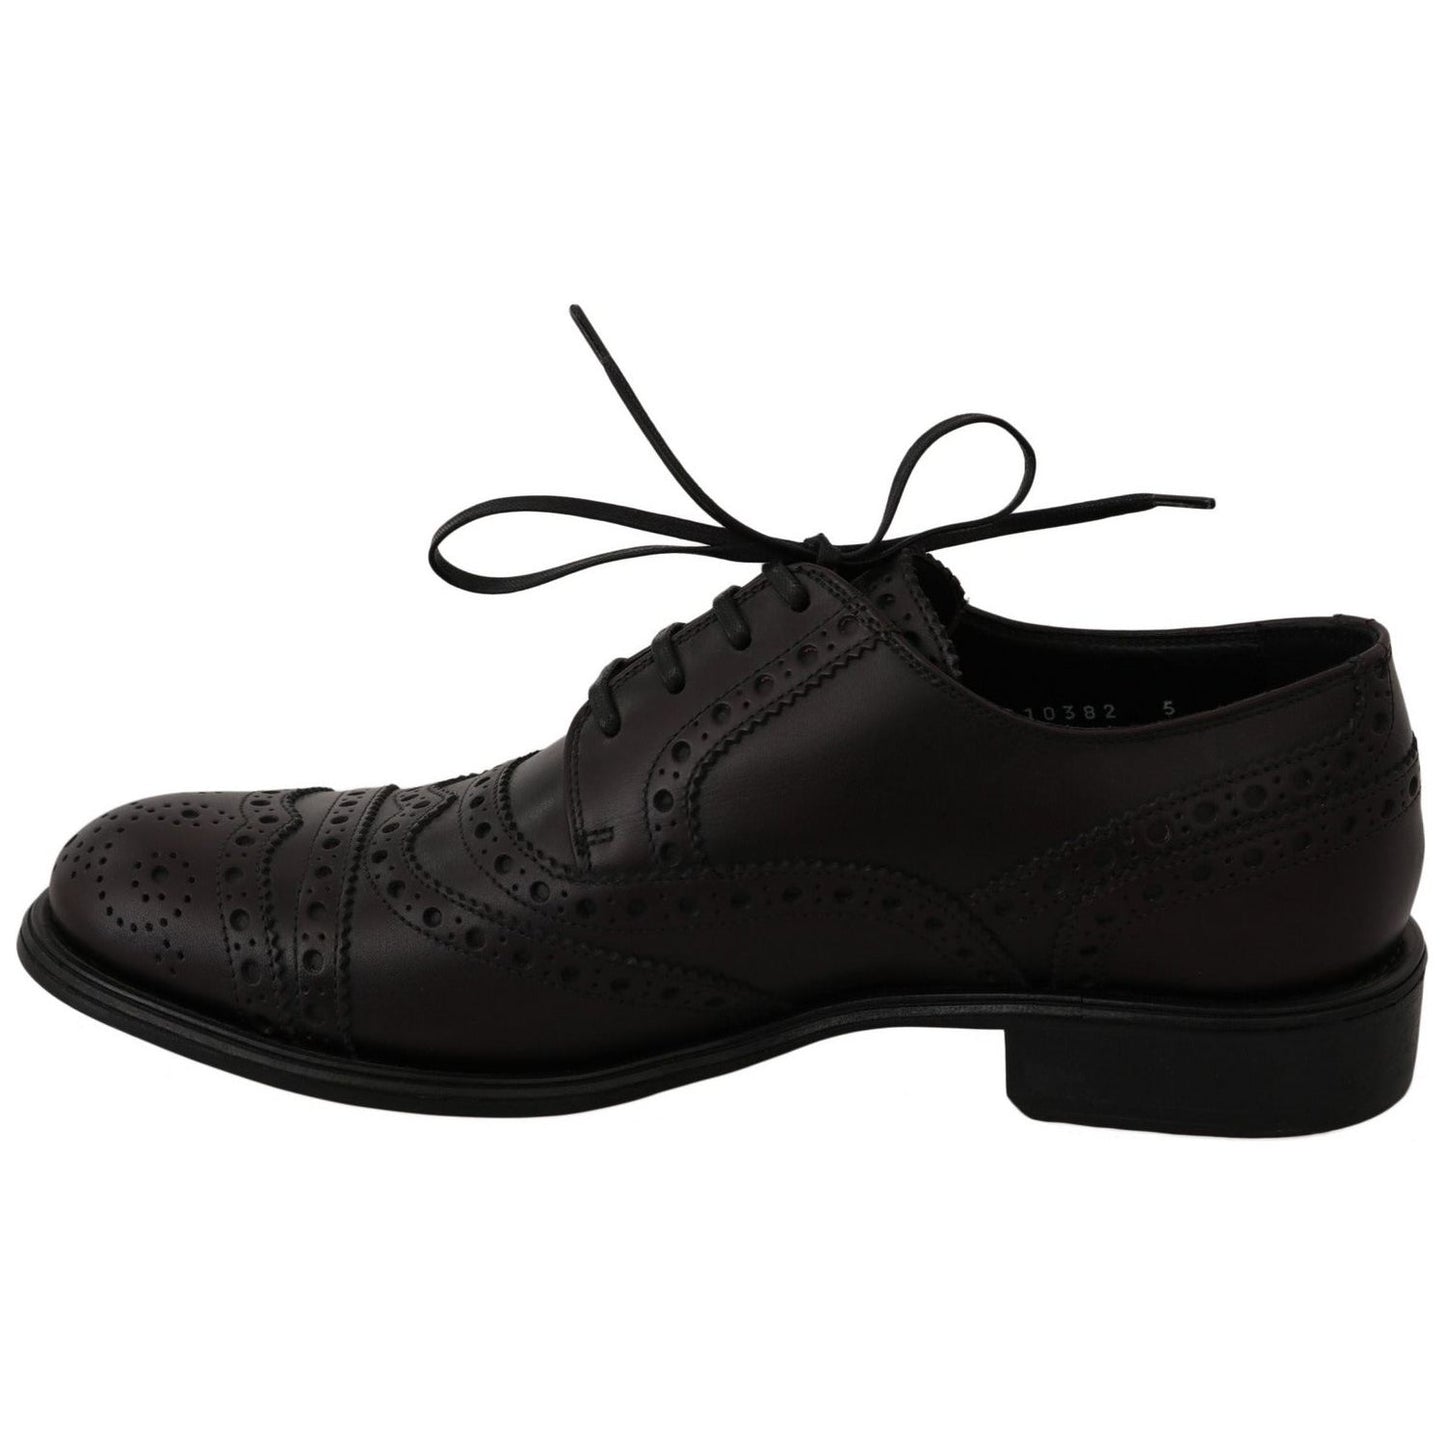 Dolce & Gabbana Elegant Bordeaux Wingtip Derby Dress Shoes black-leather-wingtip-oxford-dress-shoes-1 Dress Shoes IMG_8973-scaled_47499f16-0906-4980-ab1f-15b1cac6458c.jpg